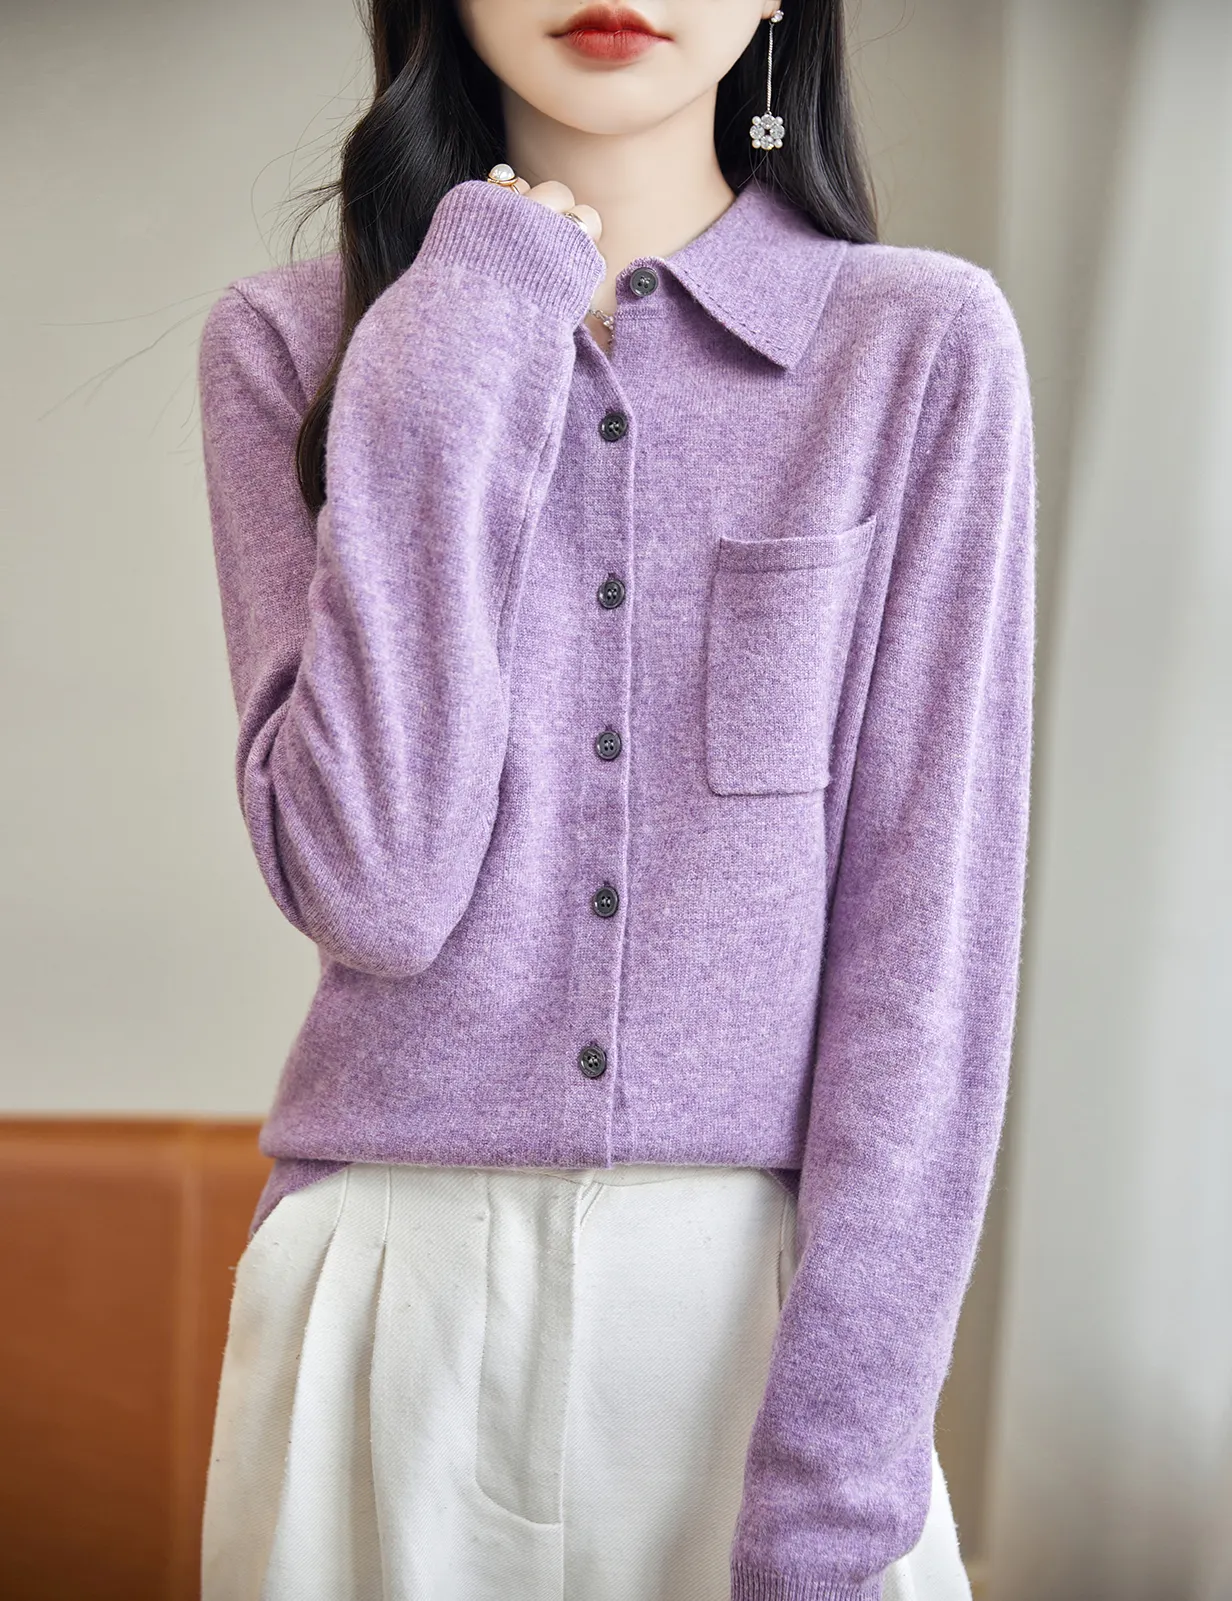 Schlussverkauf fabrik strickjacke langärmlig jacquard gestrickt damen individuelle gestrickt baumwolle wolle kaschmir pullover